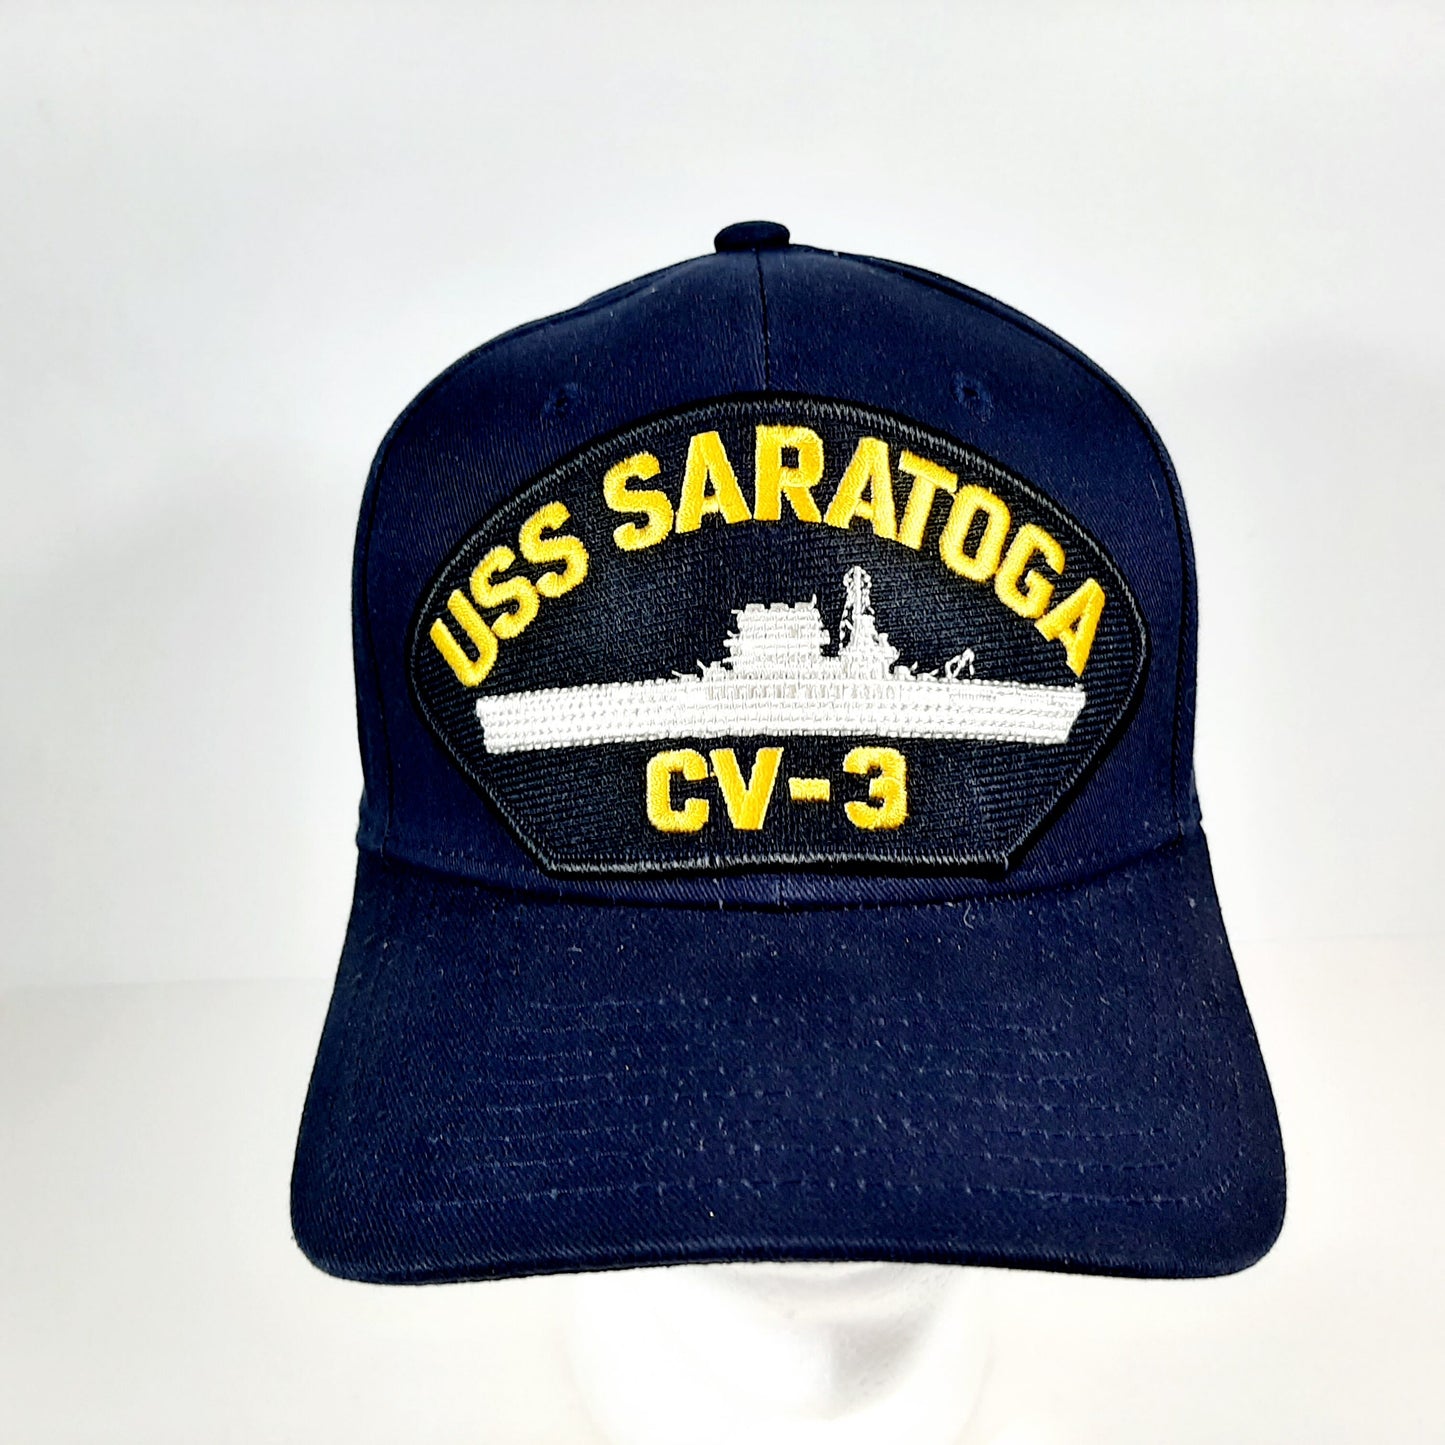 USS SARATOGA CV-3 Patch Hat Baseball Cap Adjustable Navy Blue Acrylic